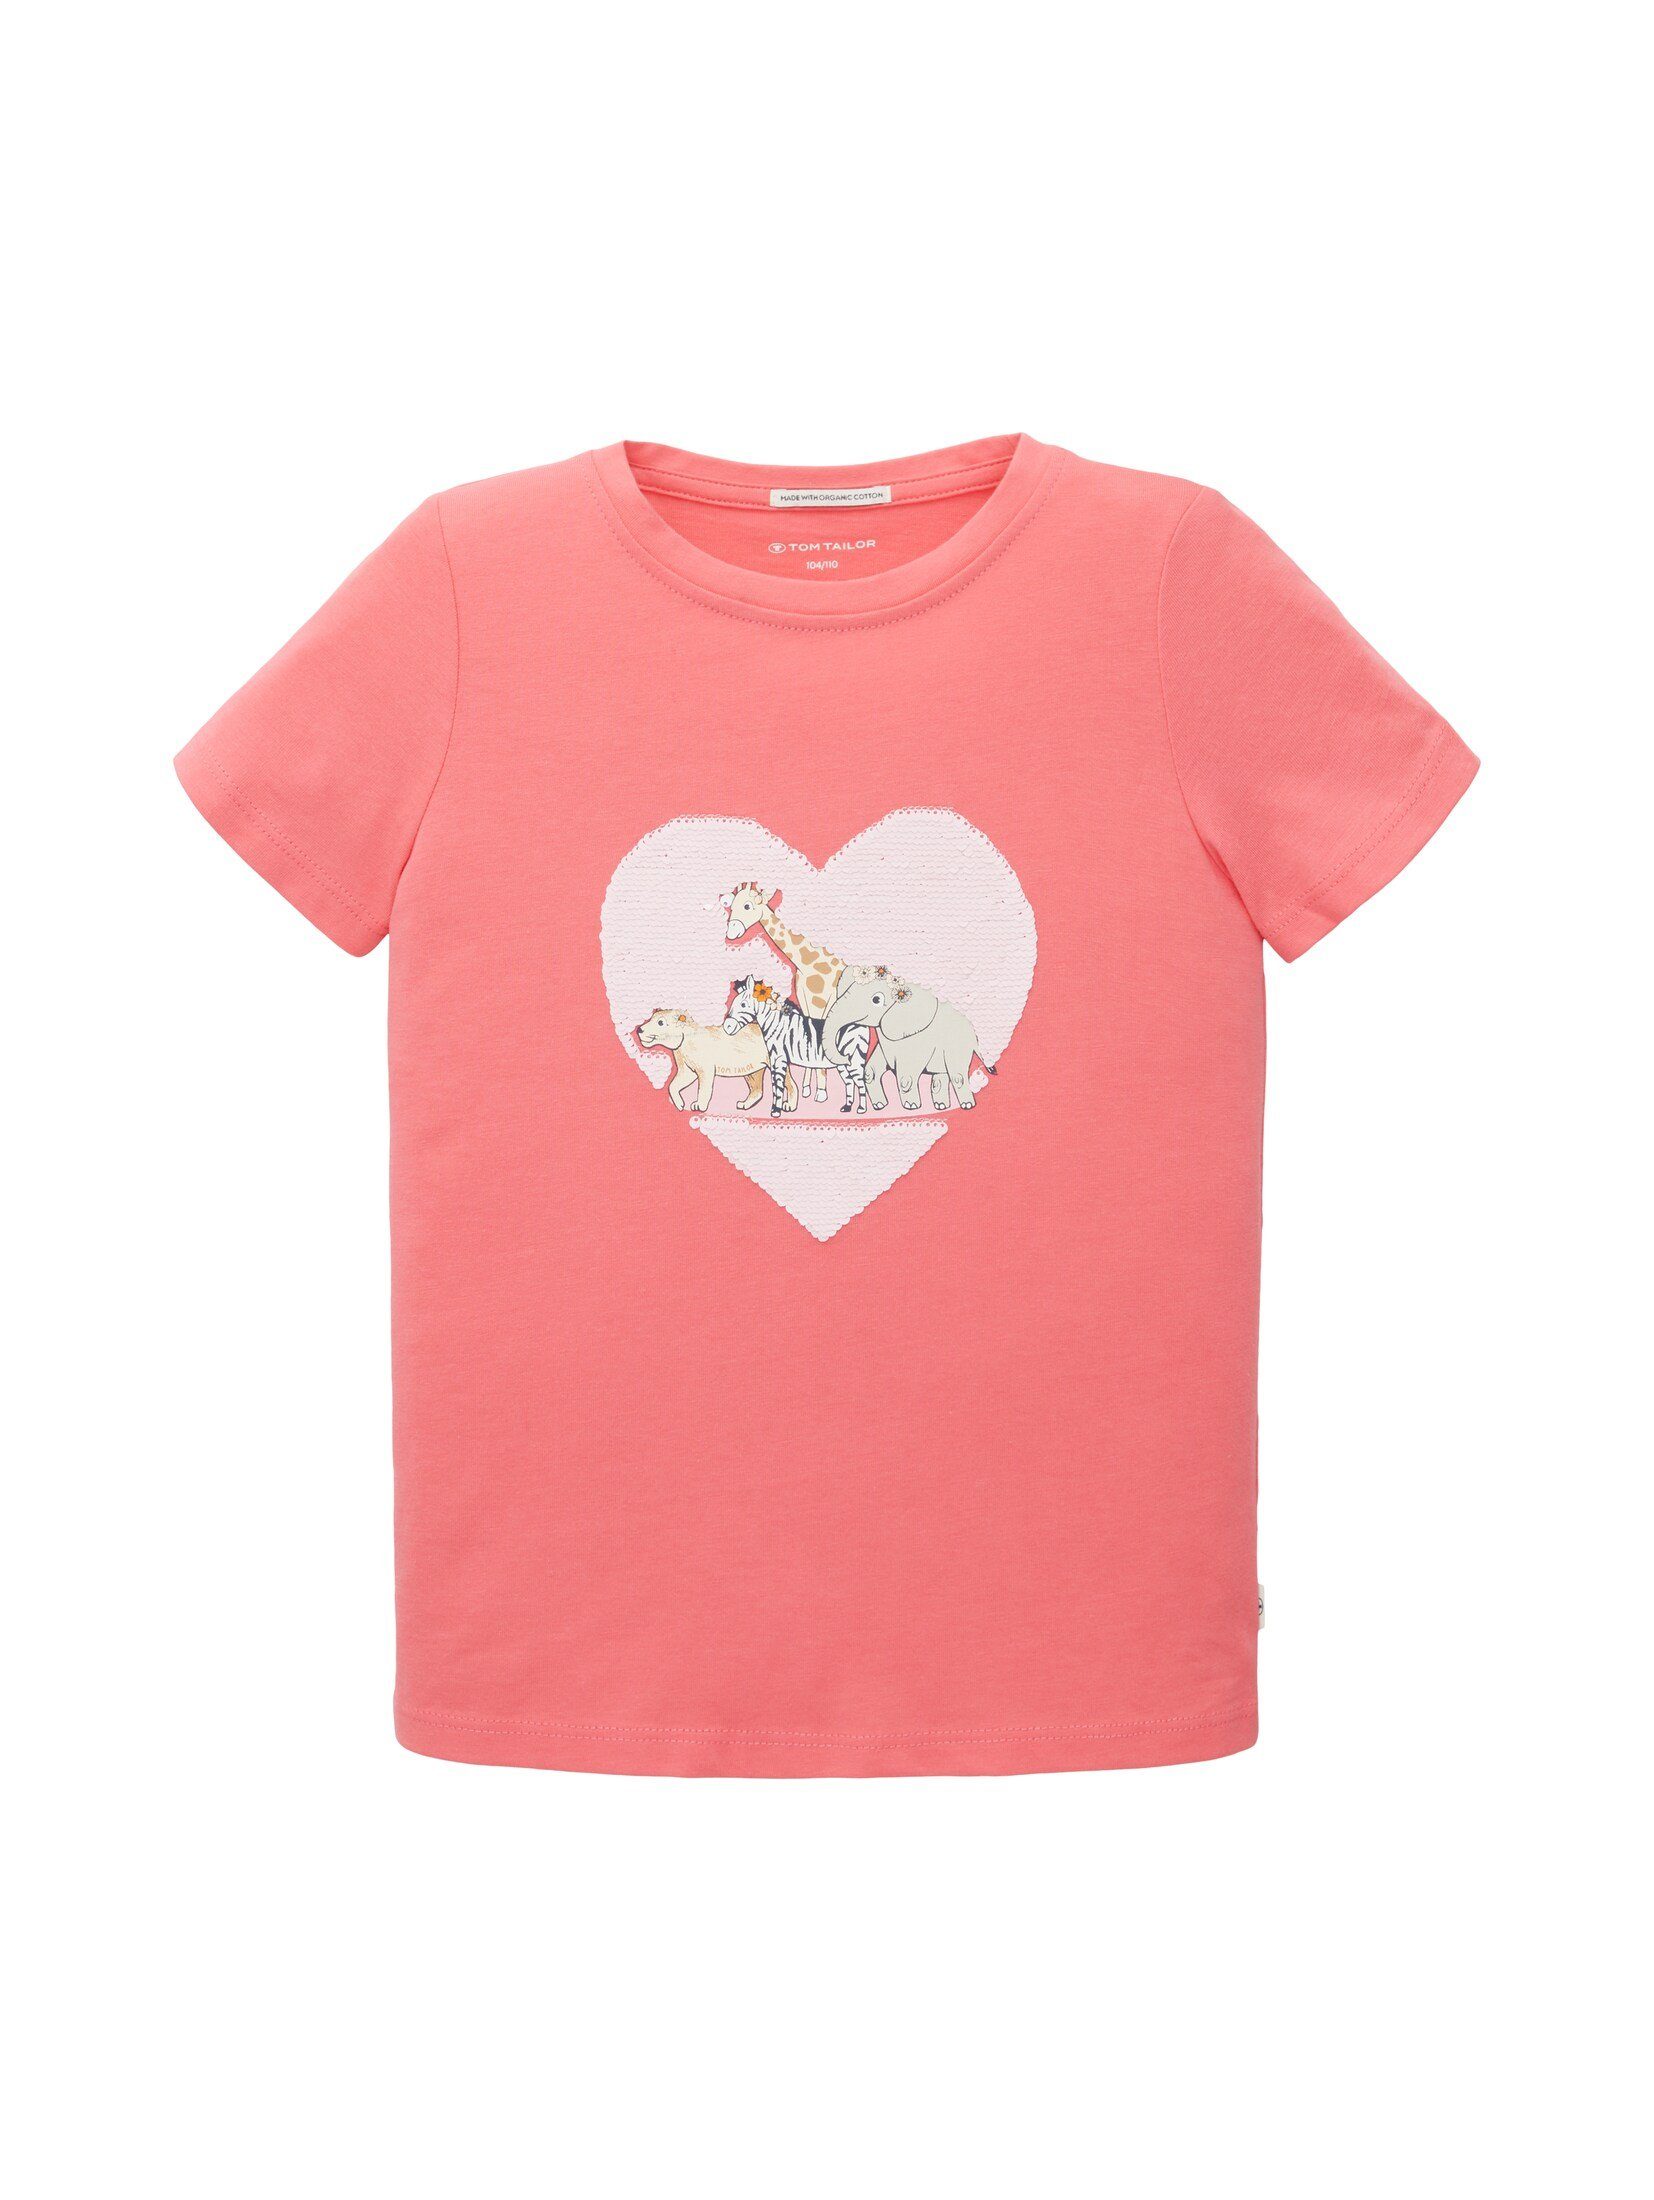 TOM TAILOR Langarmshirt T-Shirt mit Pailletten-Applikation pink dream